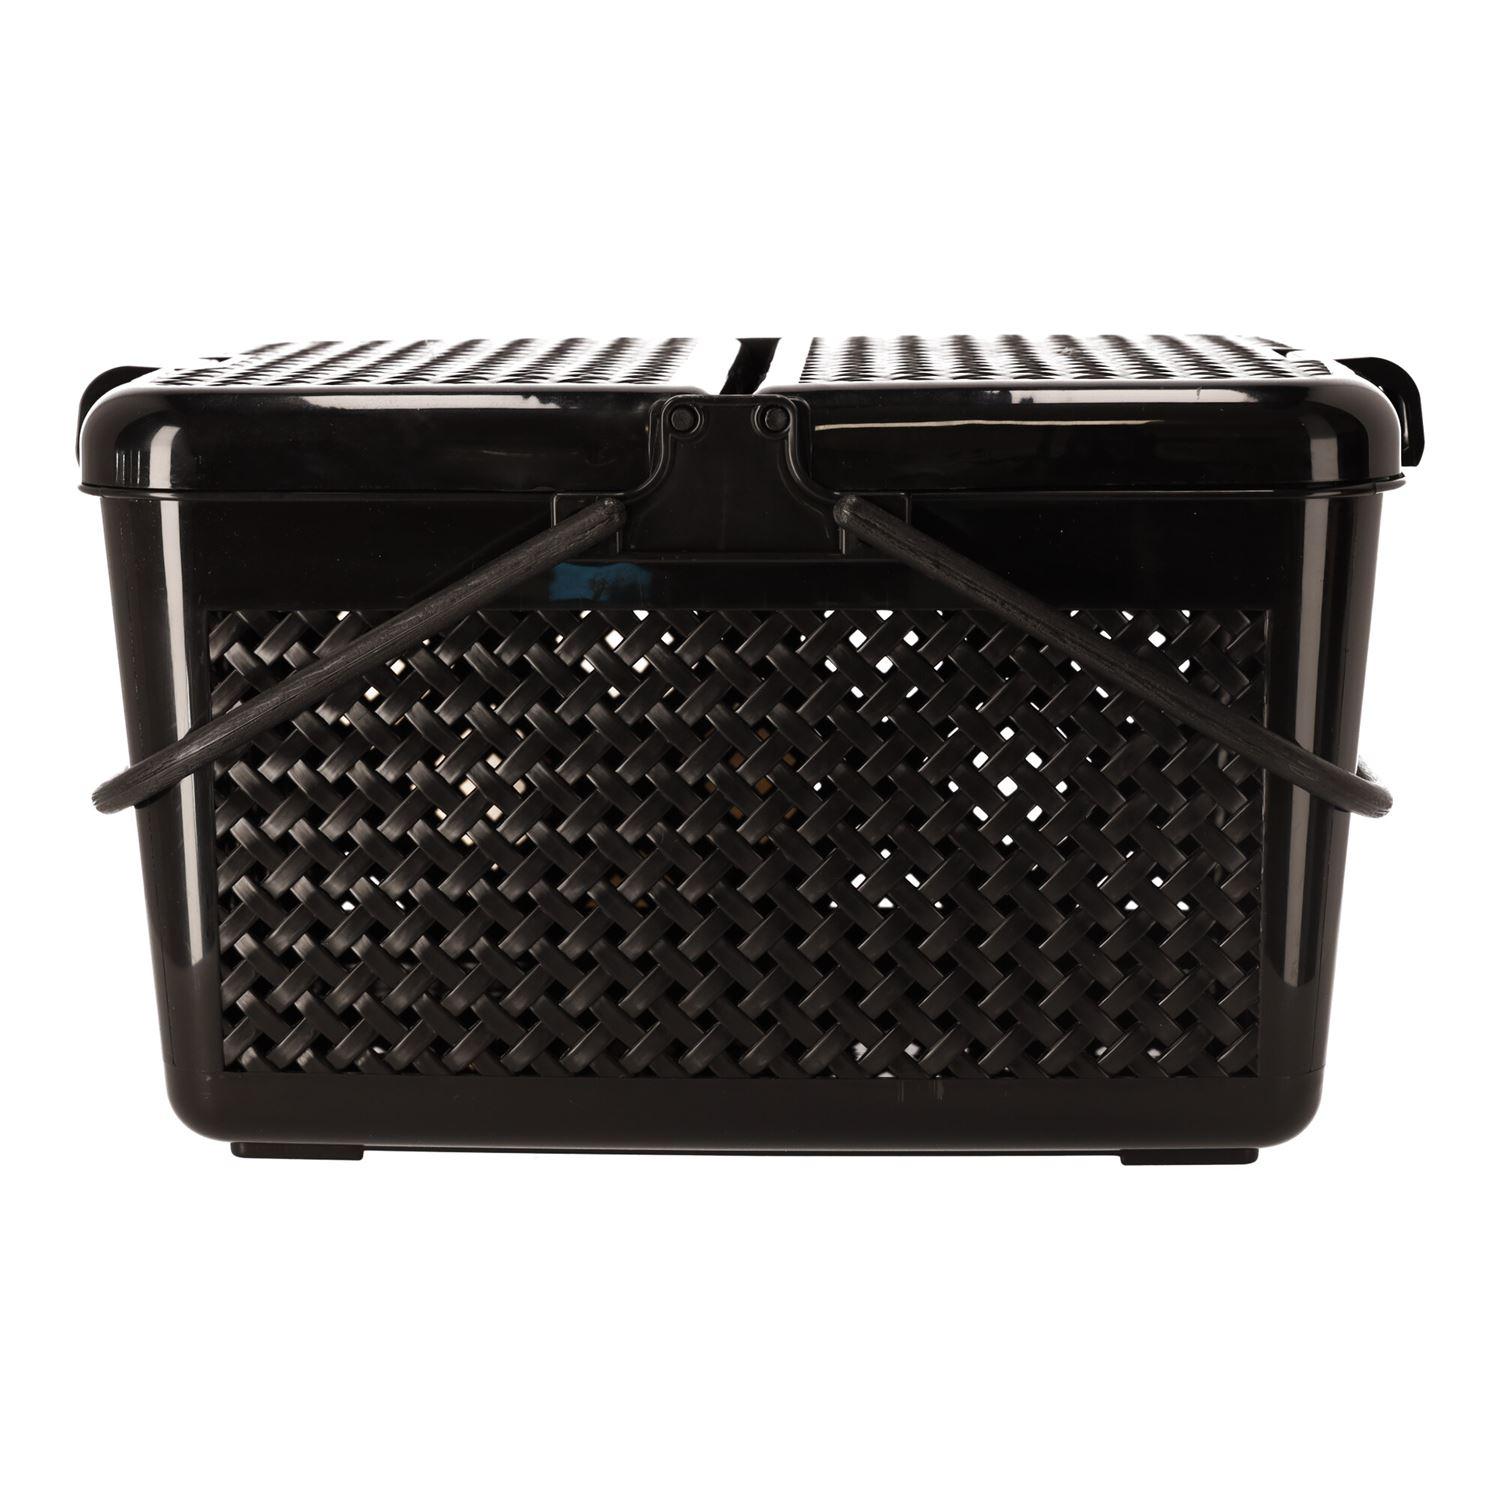 Rectangular picnic basket lockable black, POLISH PRODUCT